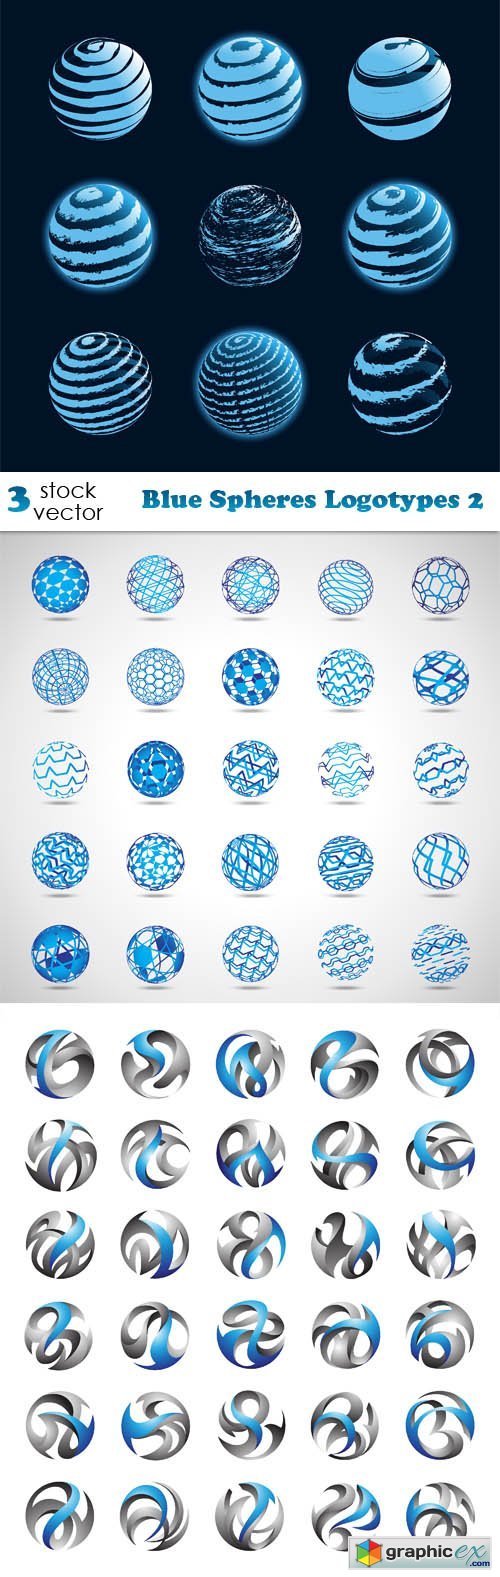 Blue Spheres Logotypes 2